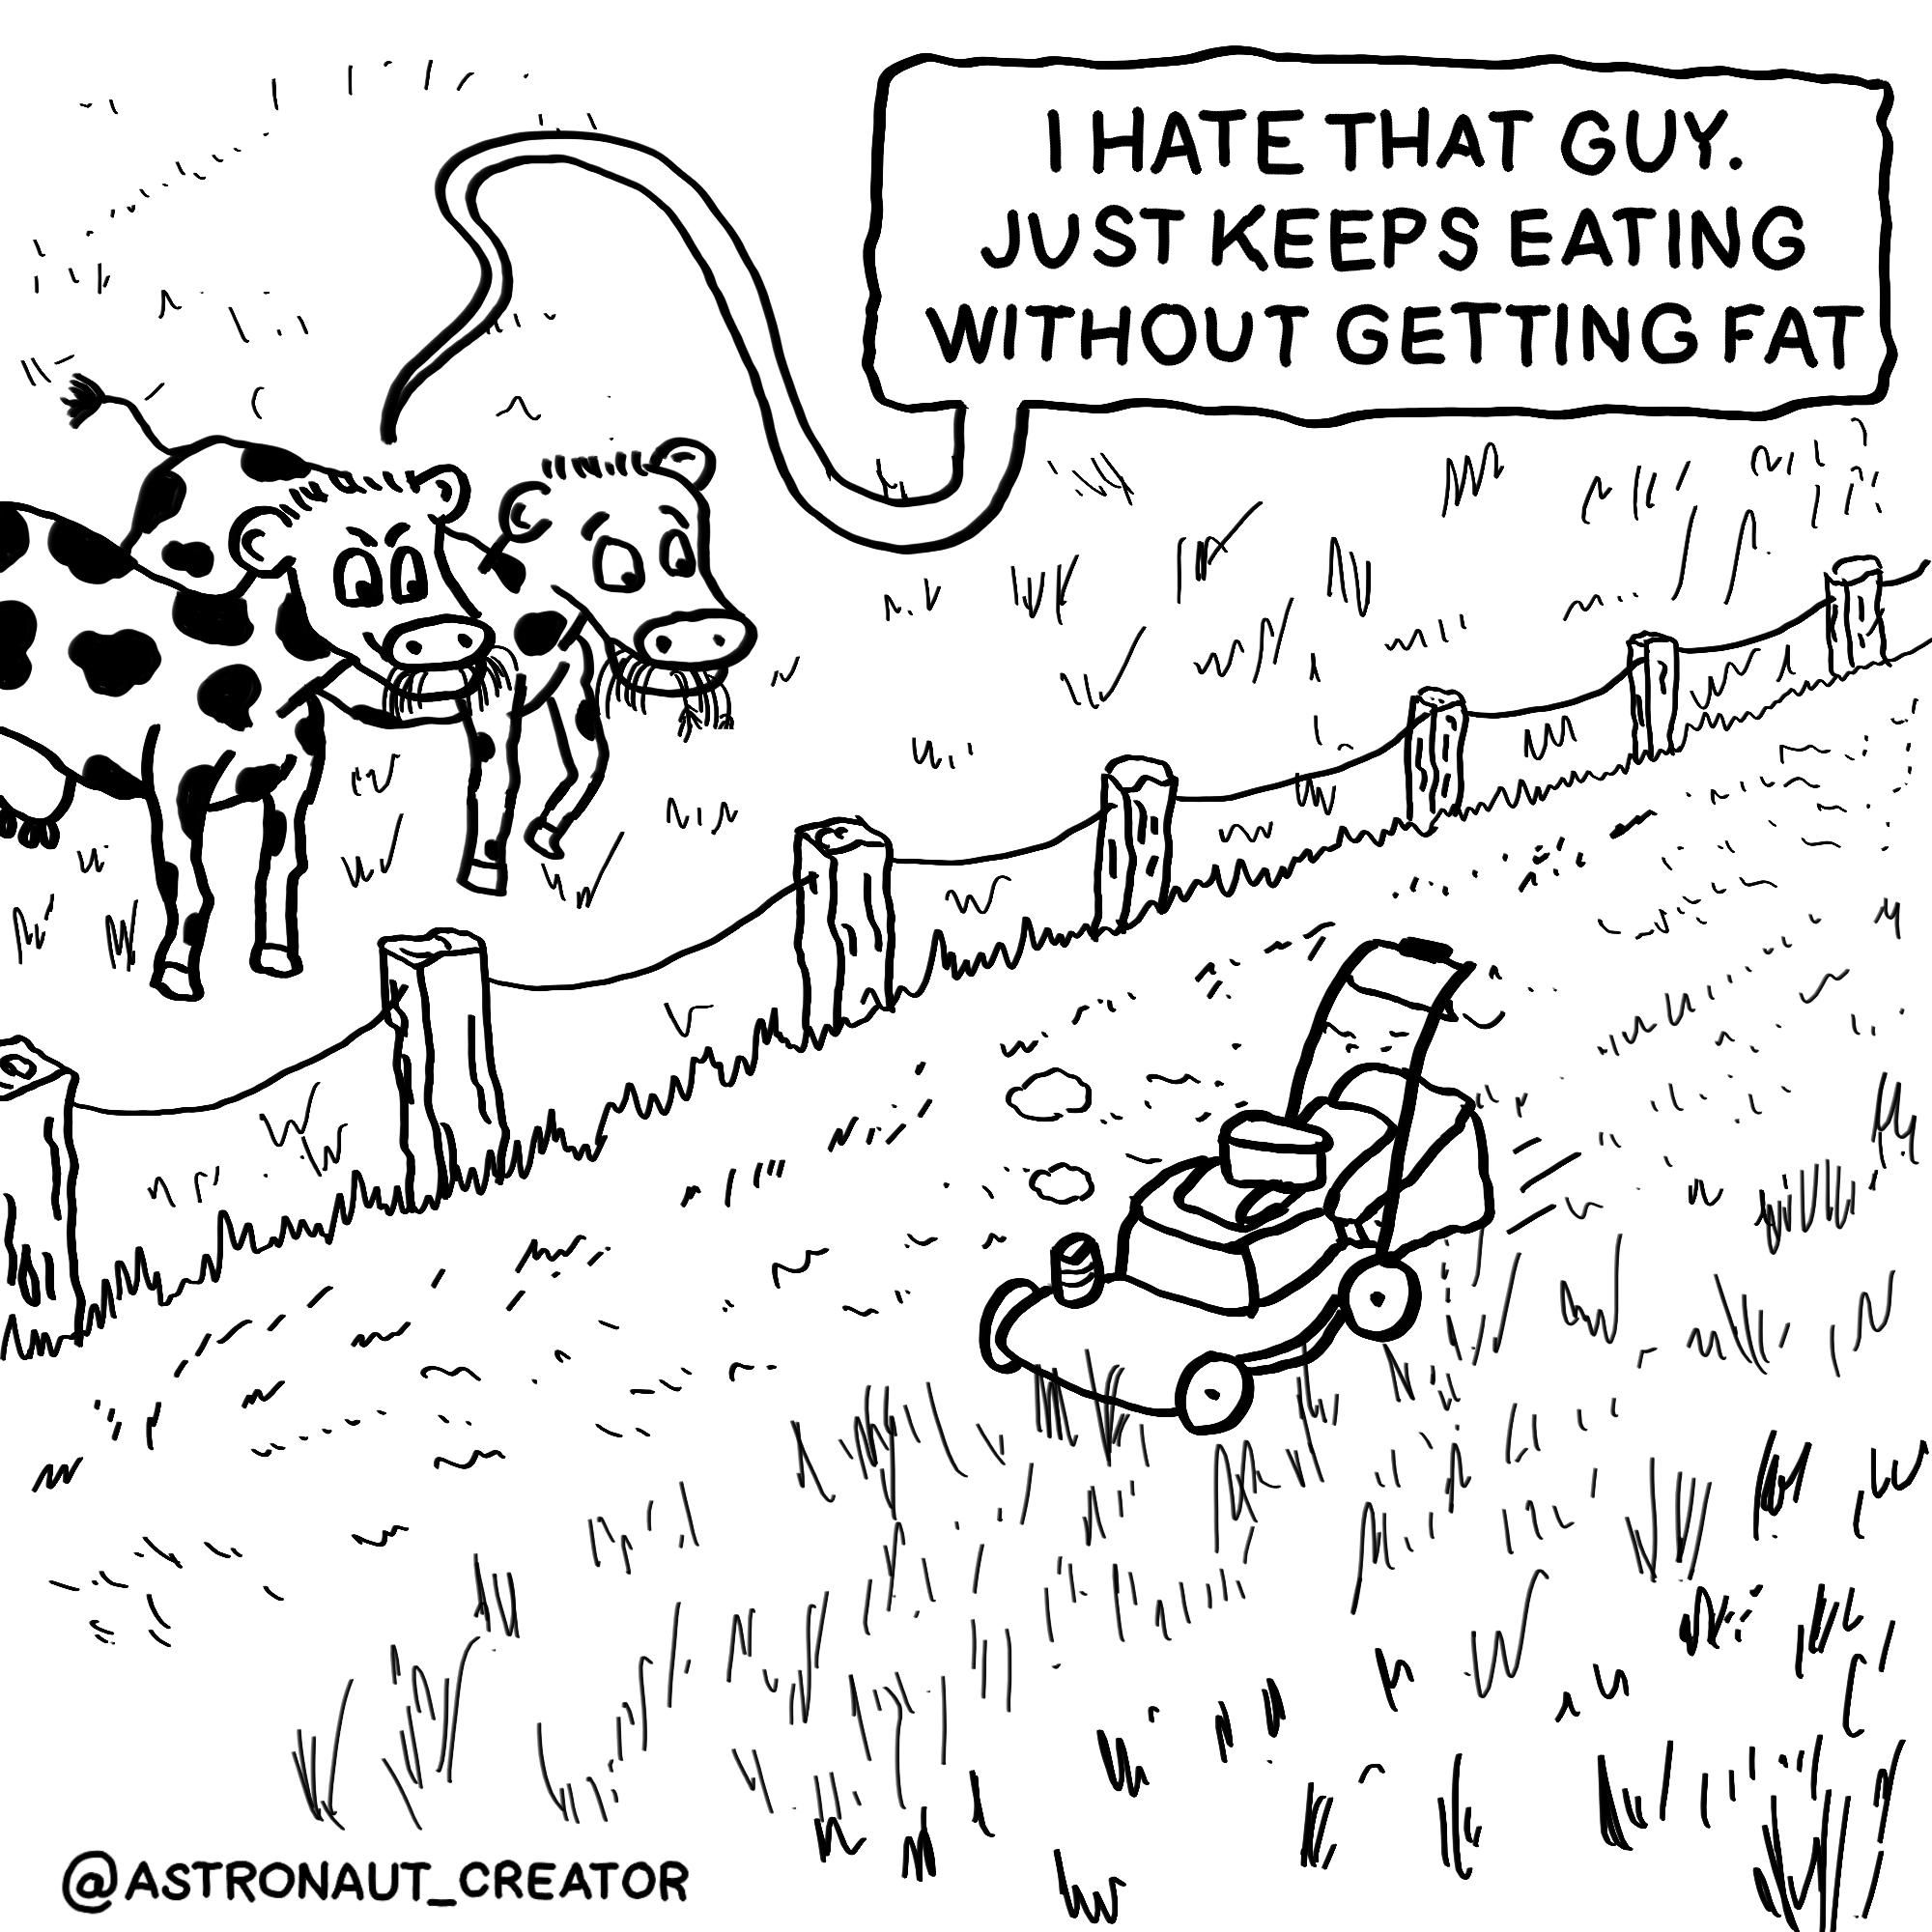 Cow-doctors hate him!